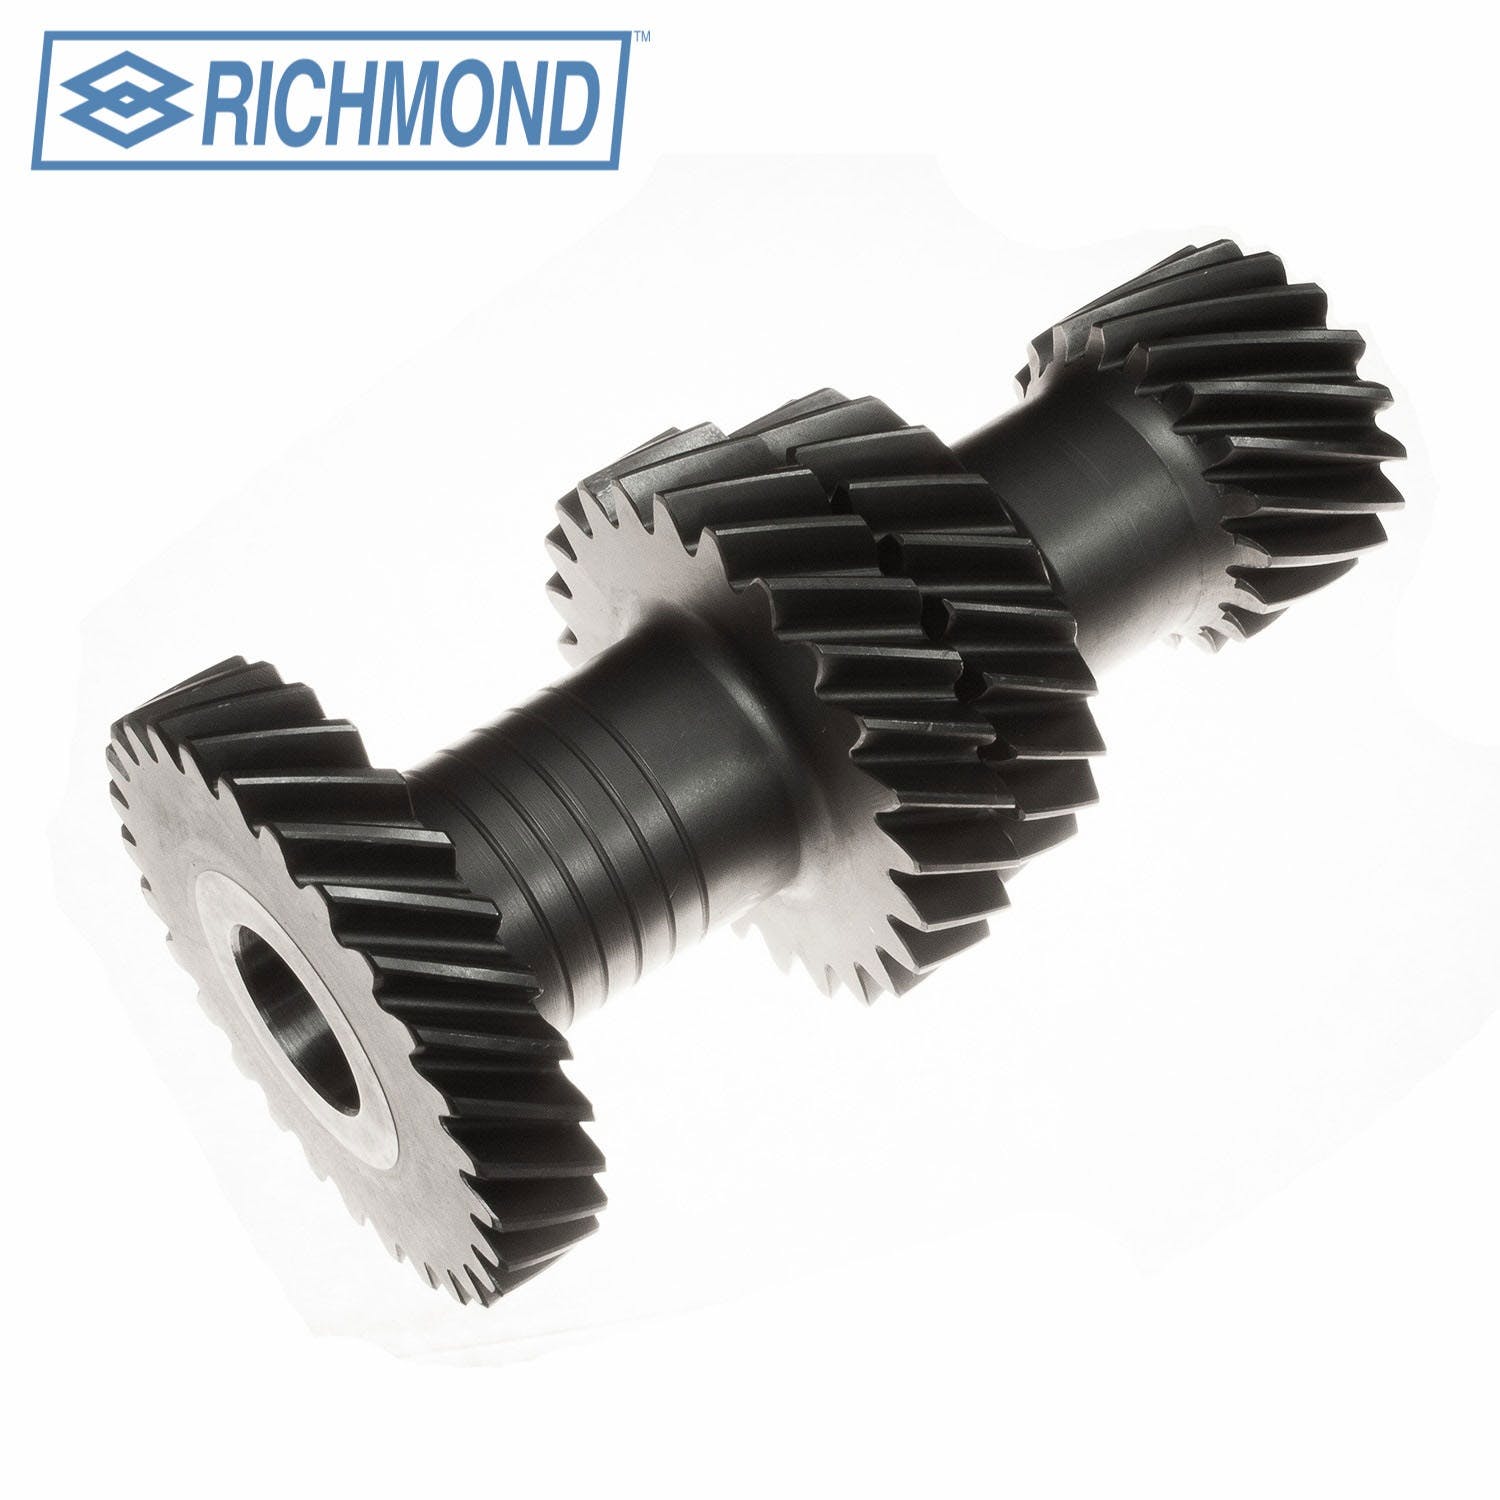 Richmond 1304077010 Cluster Gear 2.64 (X) 28-24-21-18